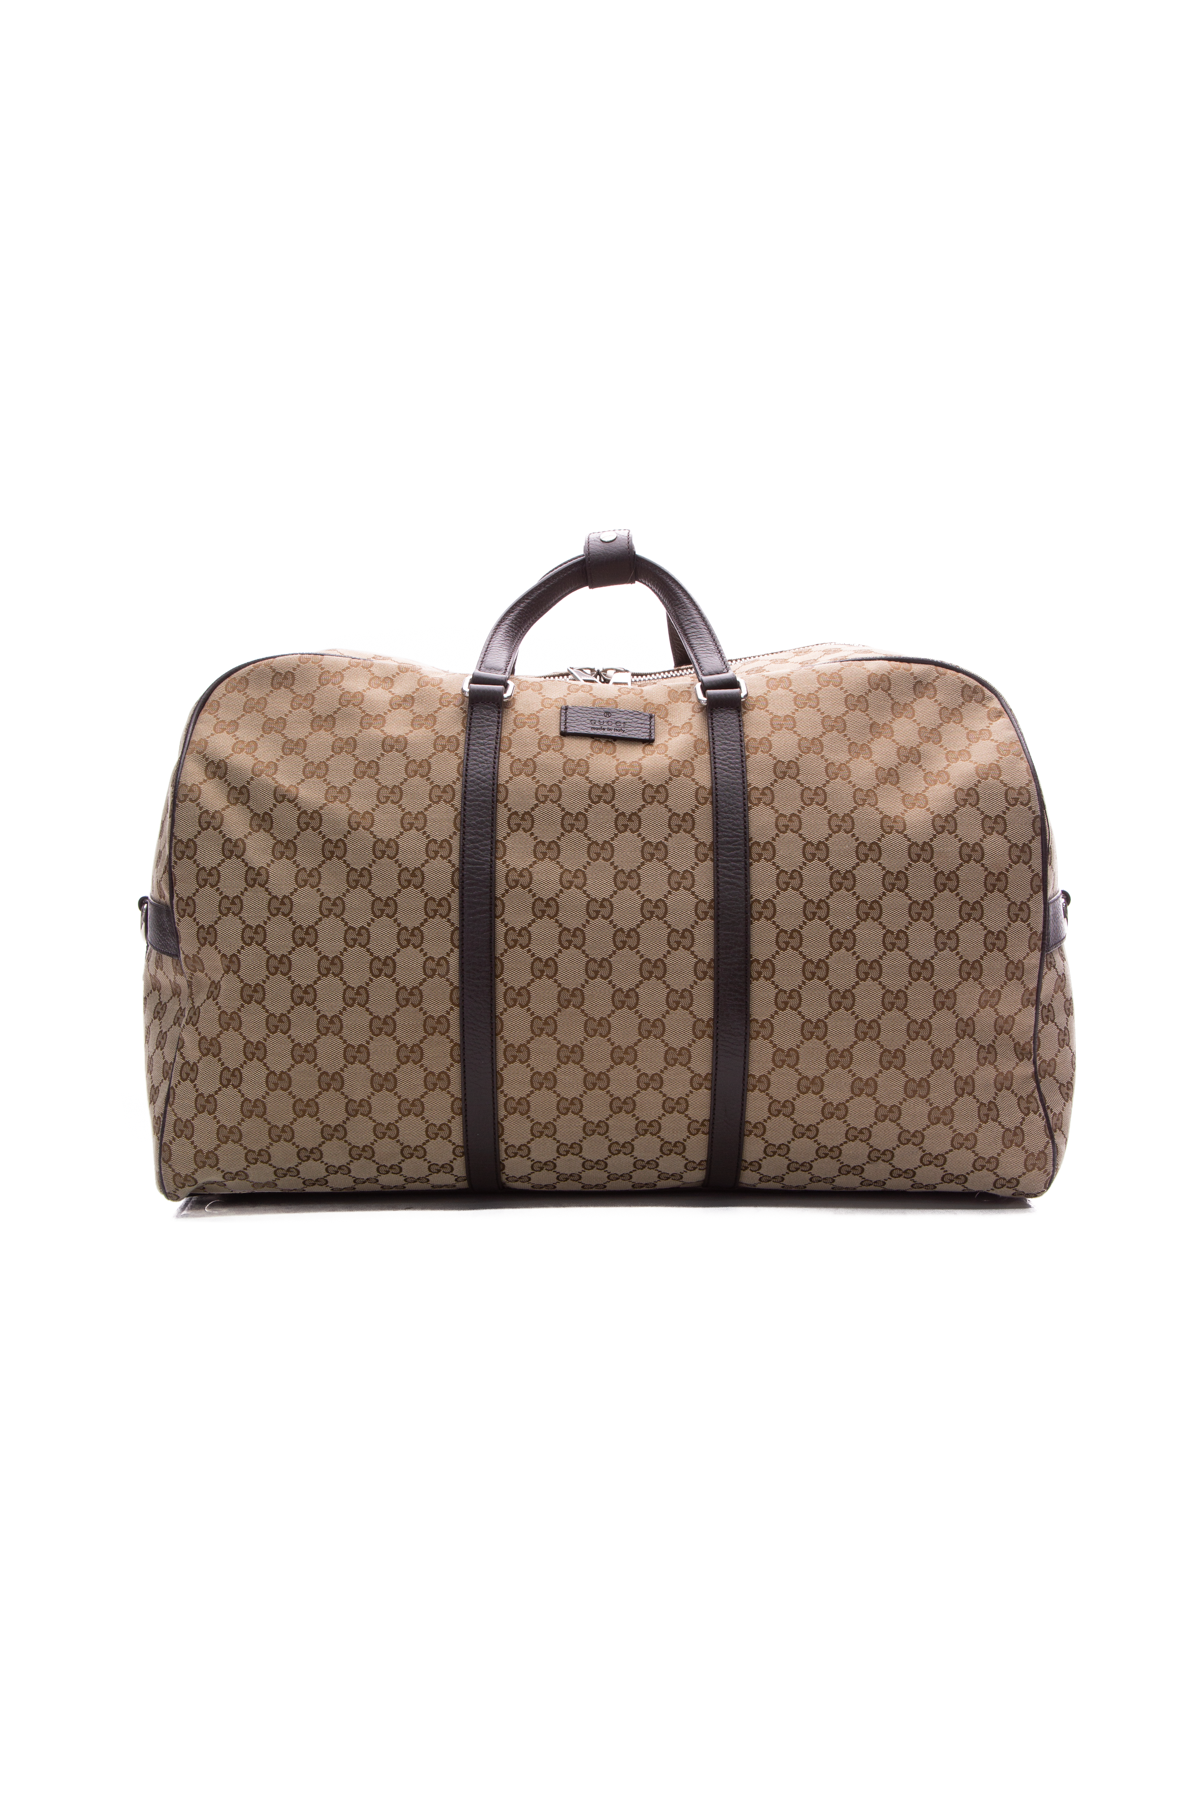 Gucci x adidas mini duffle bag | Mini duffle bag, Adidas duffle bag, Duffle  bag